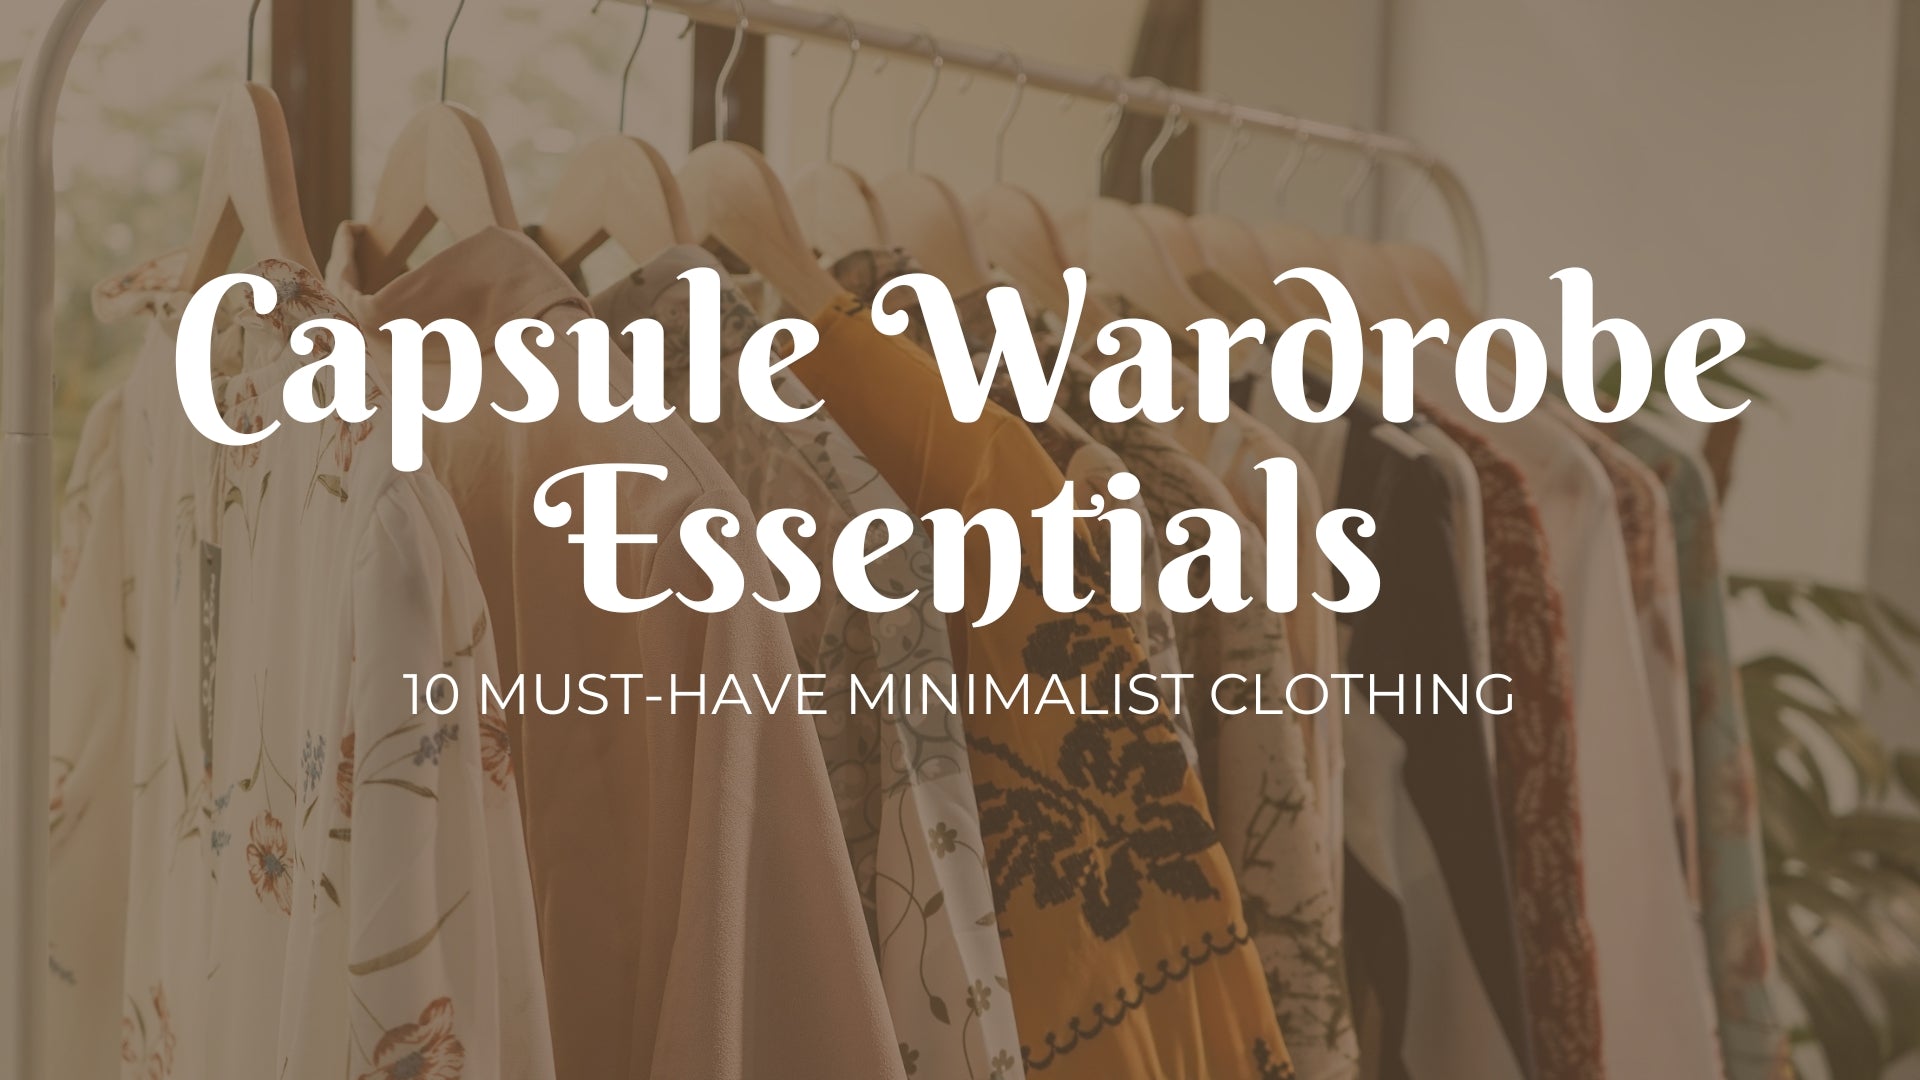 Capsule Wardrobe Essentials: 10 Must-Have Minimalist Clothing